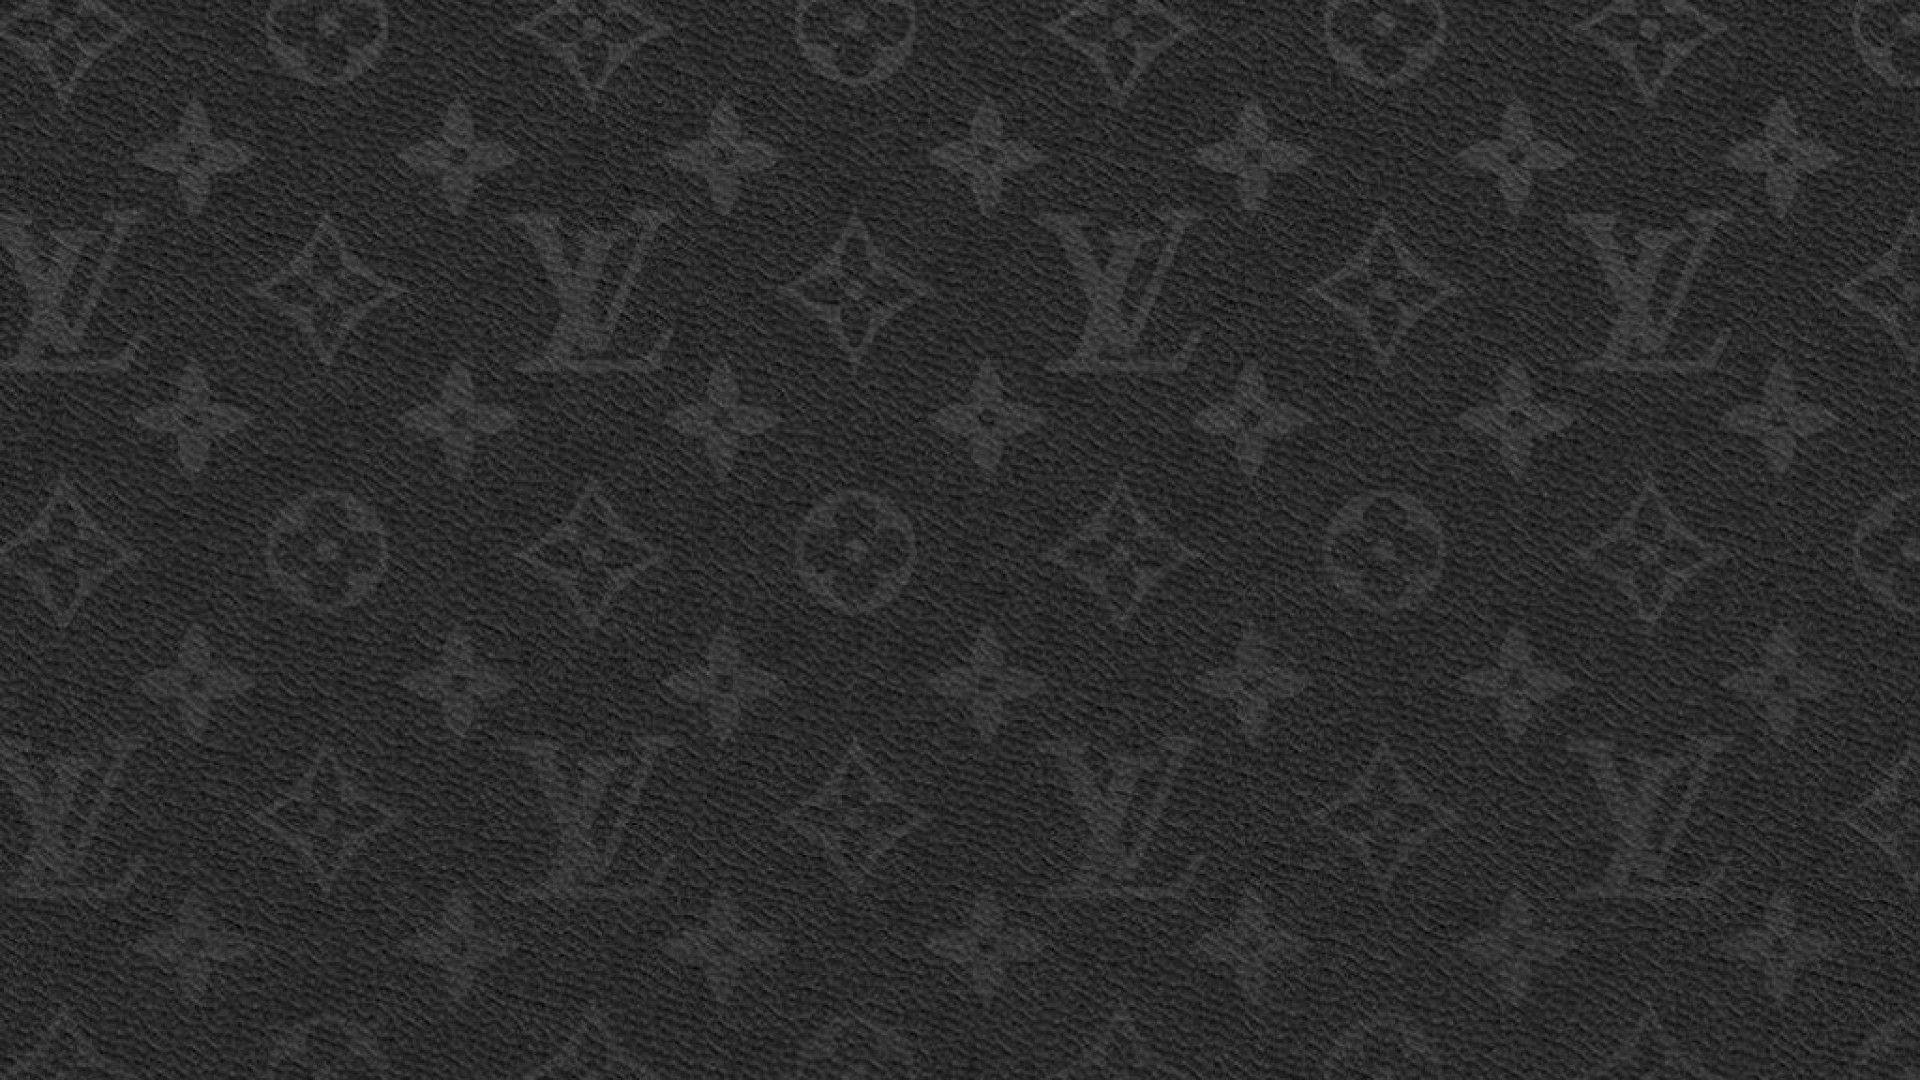 Black Louis Vuitton iPhone Wallpapers - Top Free Black Louis